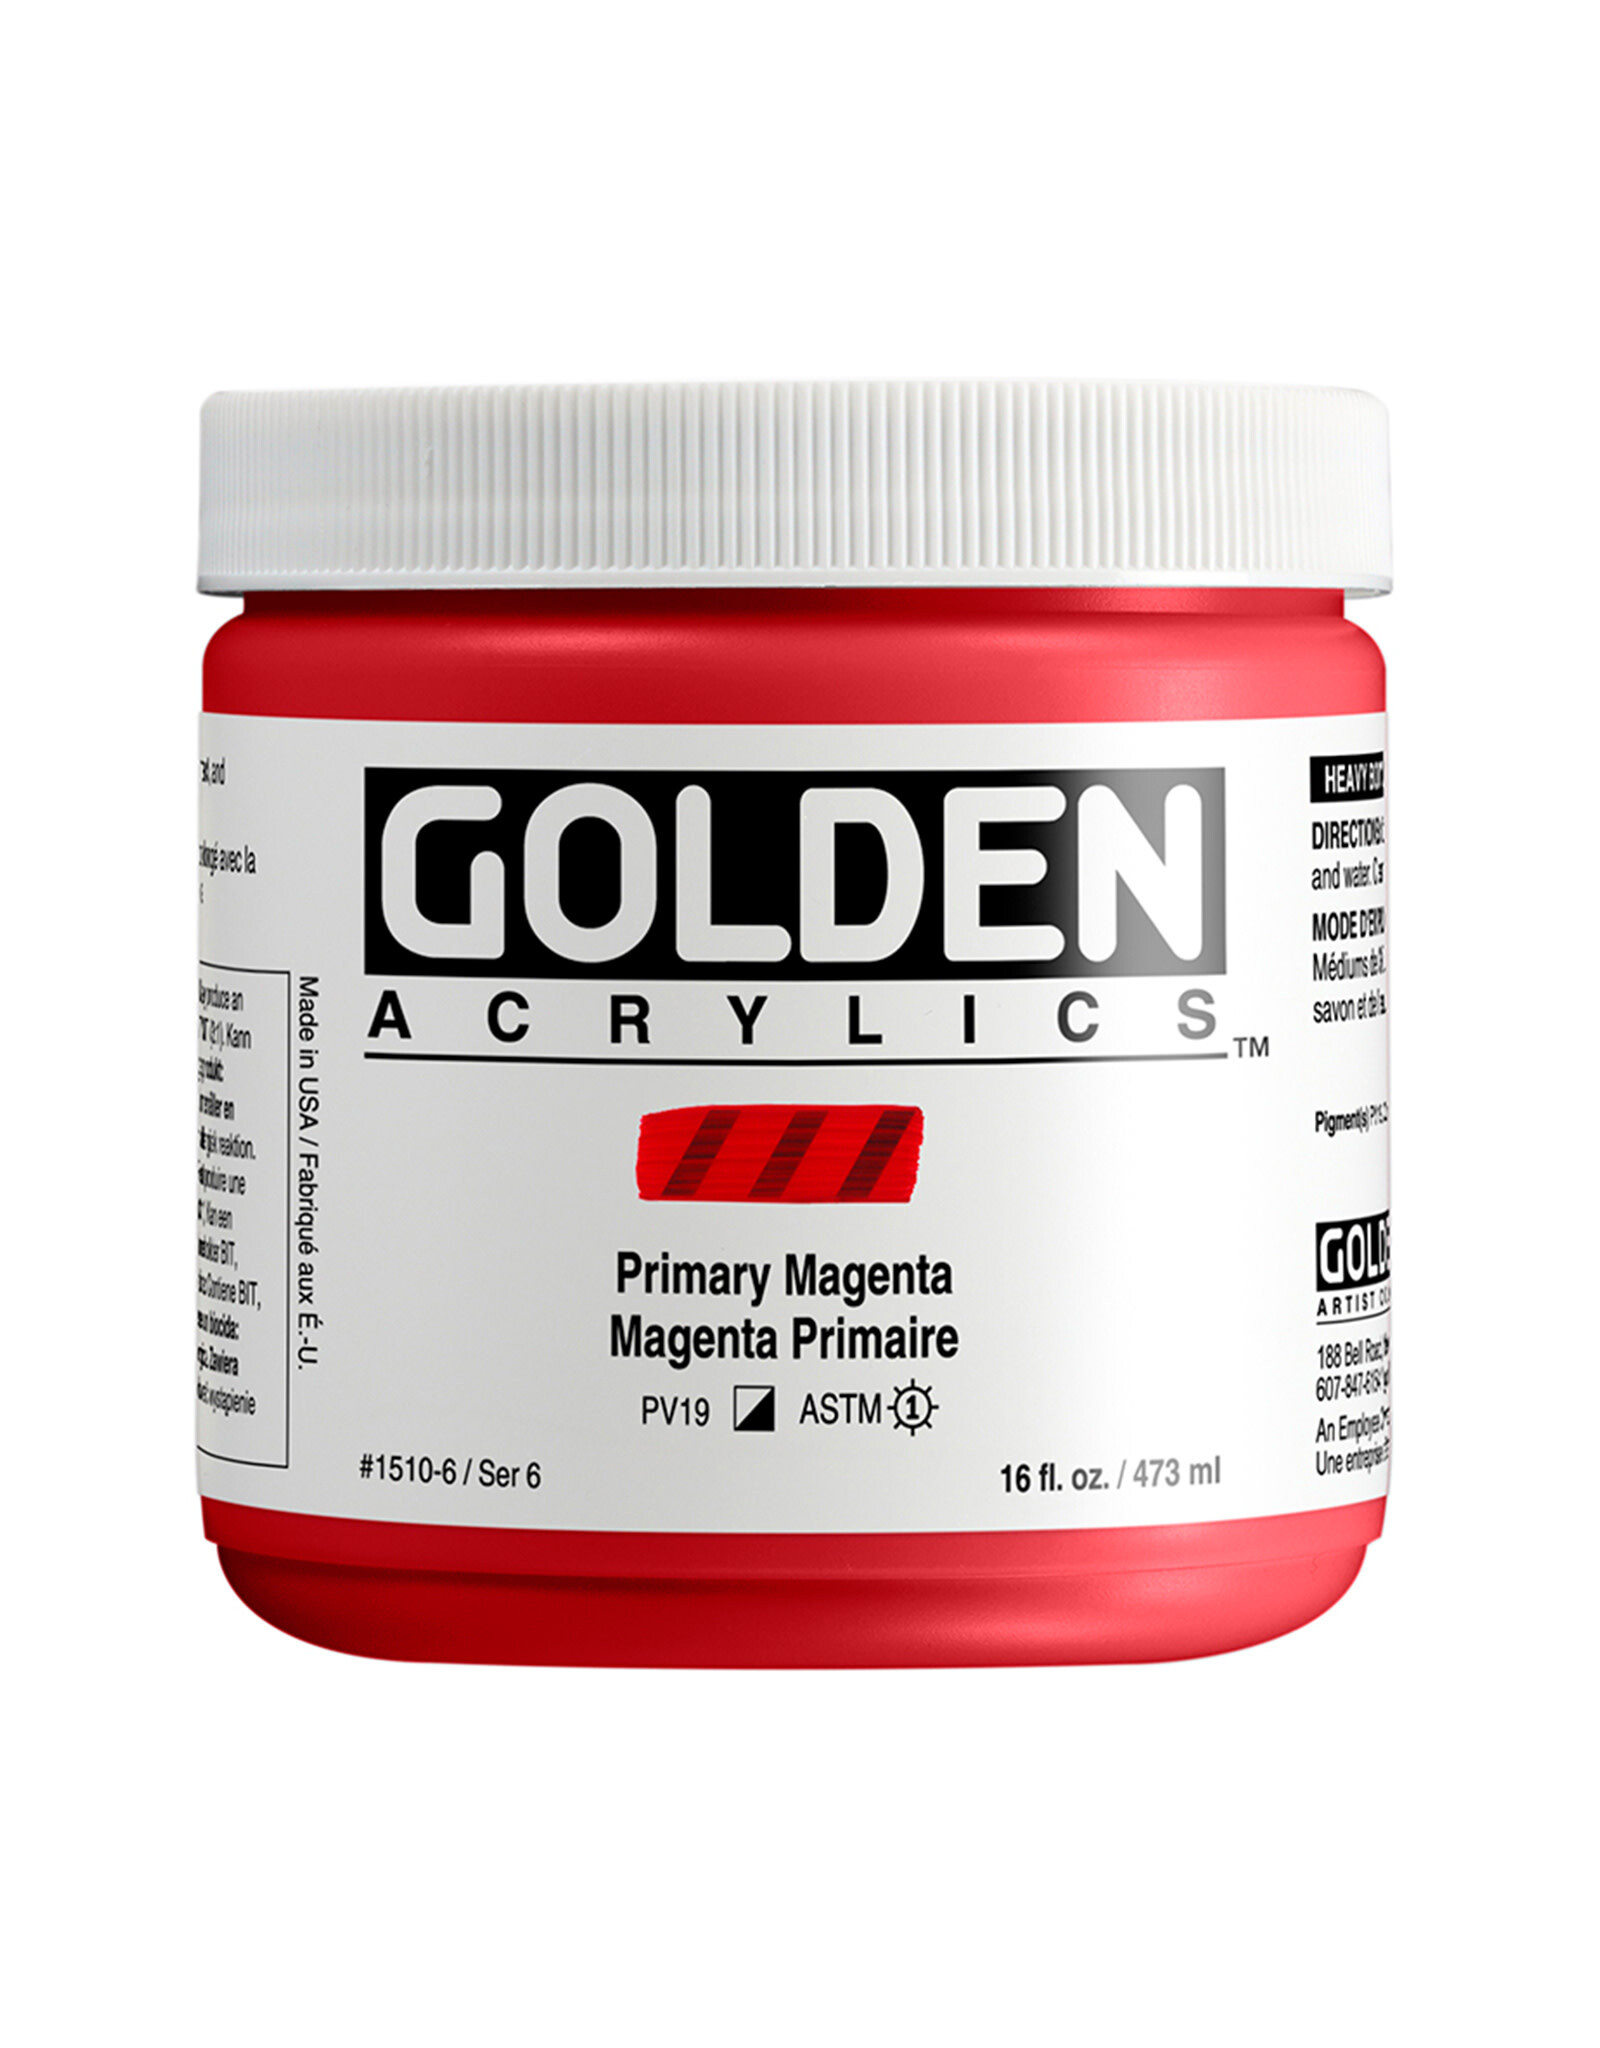 Golden Golden Heavy Body Acrylic Paint, Primary Magenta, 16oz